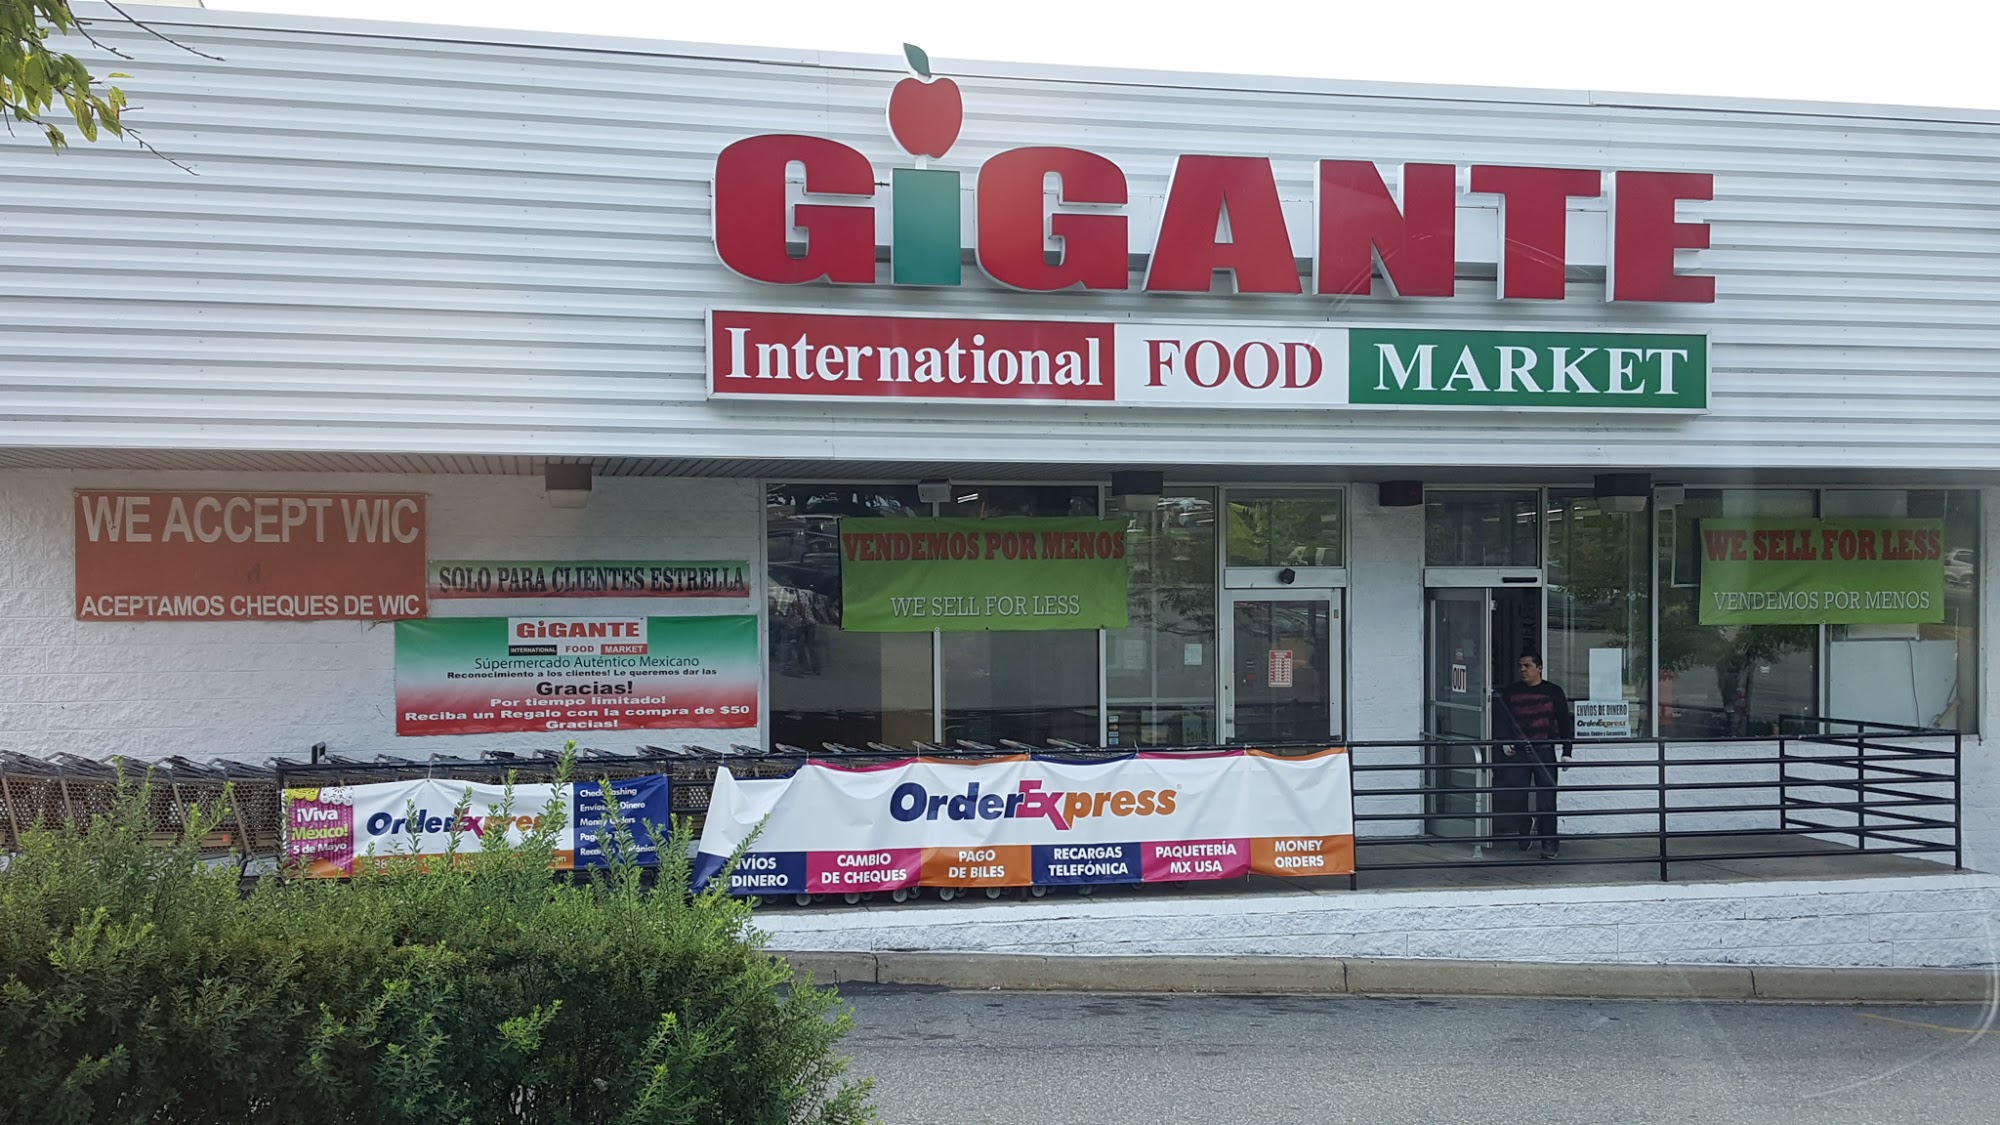 Gigante International Food Market